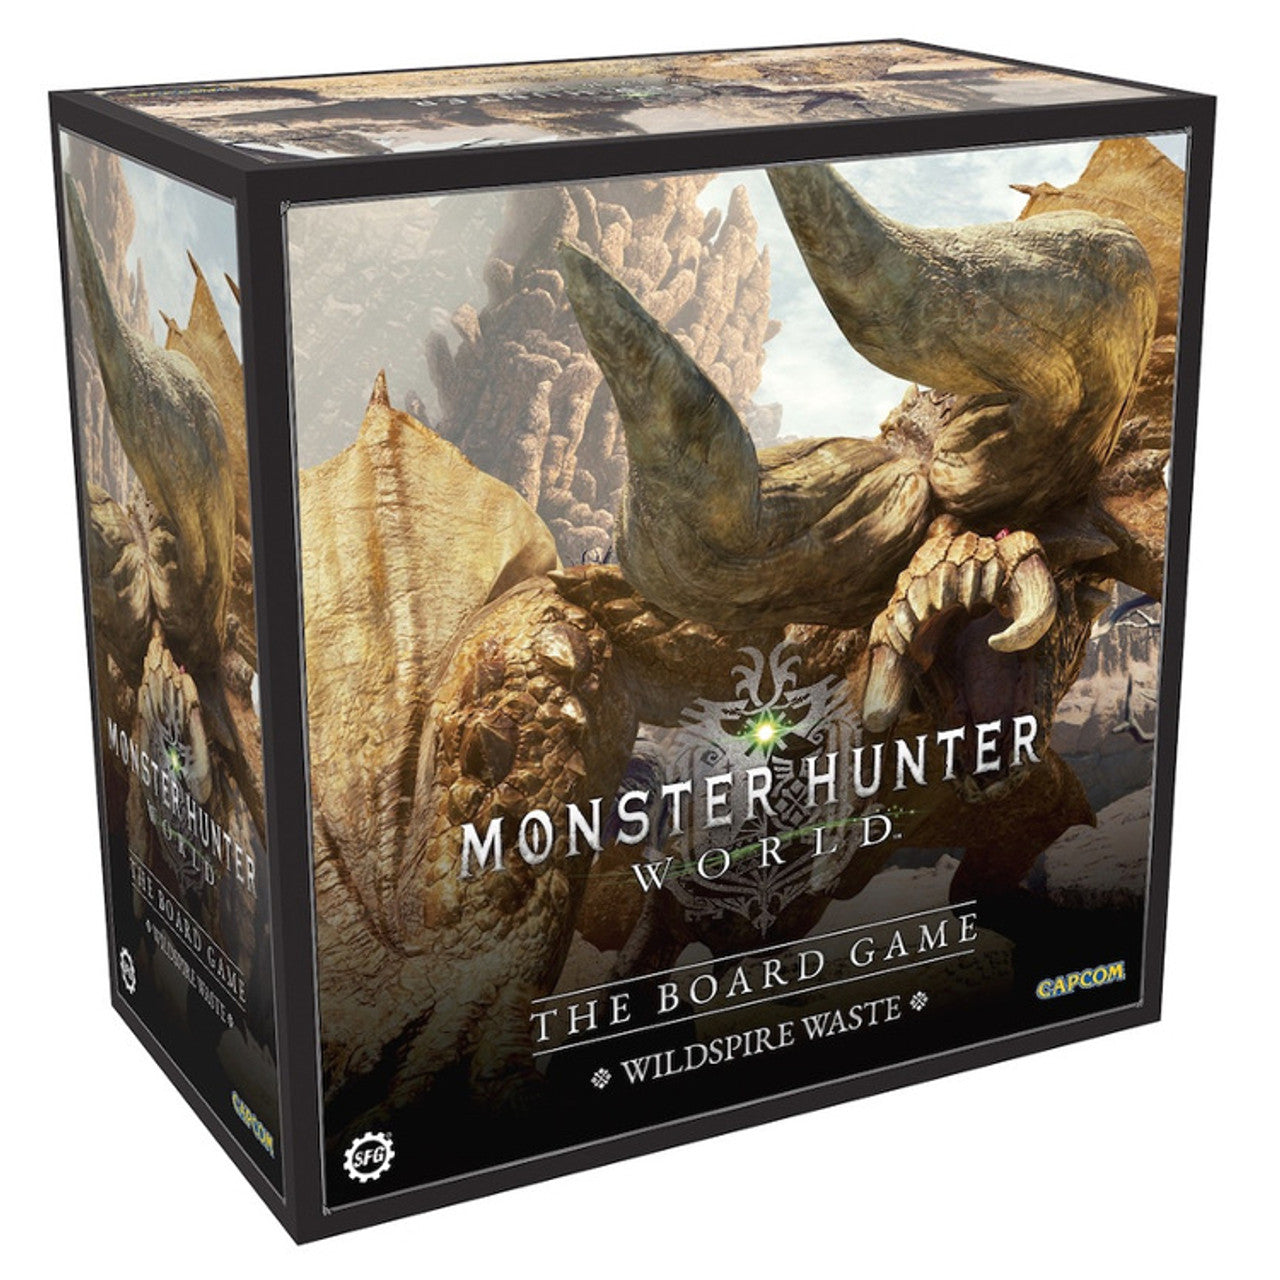 Monster Hunter World: The Board Game - Wildspire Waste